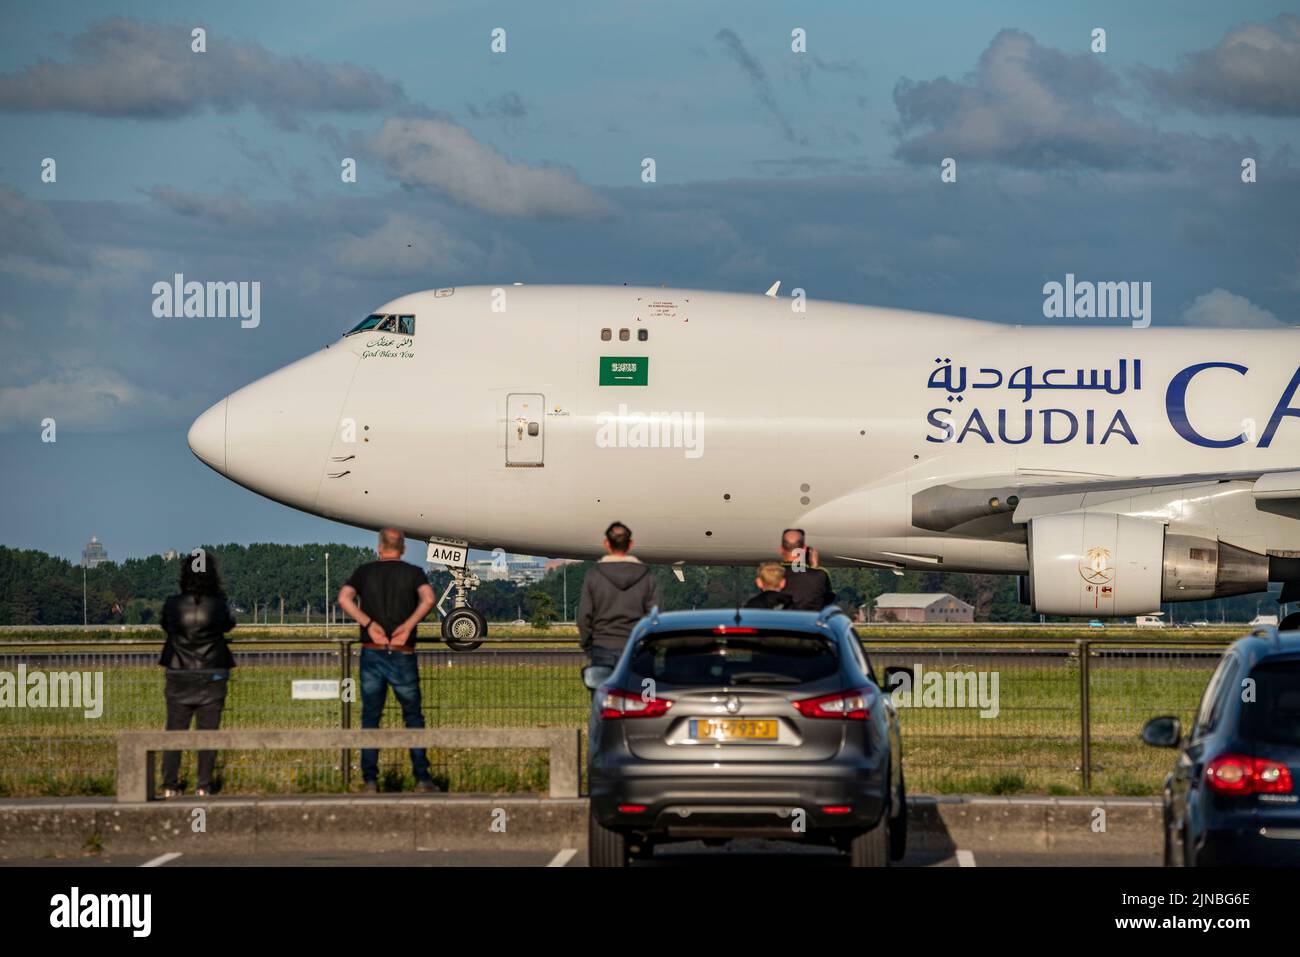 Amsterdam Shiphol Airport, Polderbaan, una de las 6 pistas, spotter spot, ver los aviones de cerca, TF-AMB, Saudi Arabian Airlines Boeing 747-400F Foto de stock